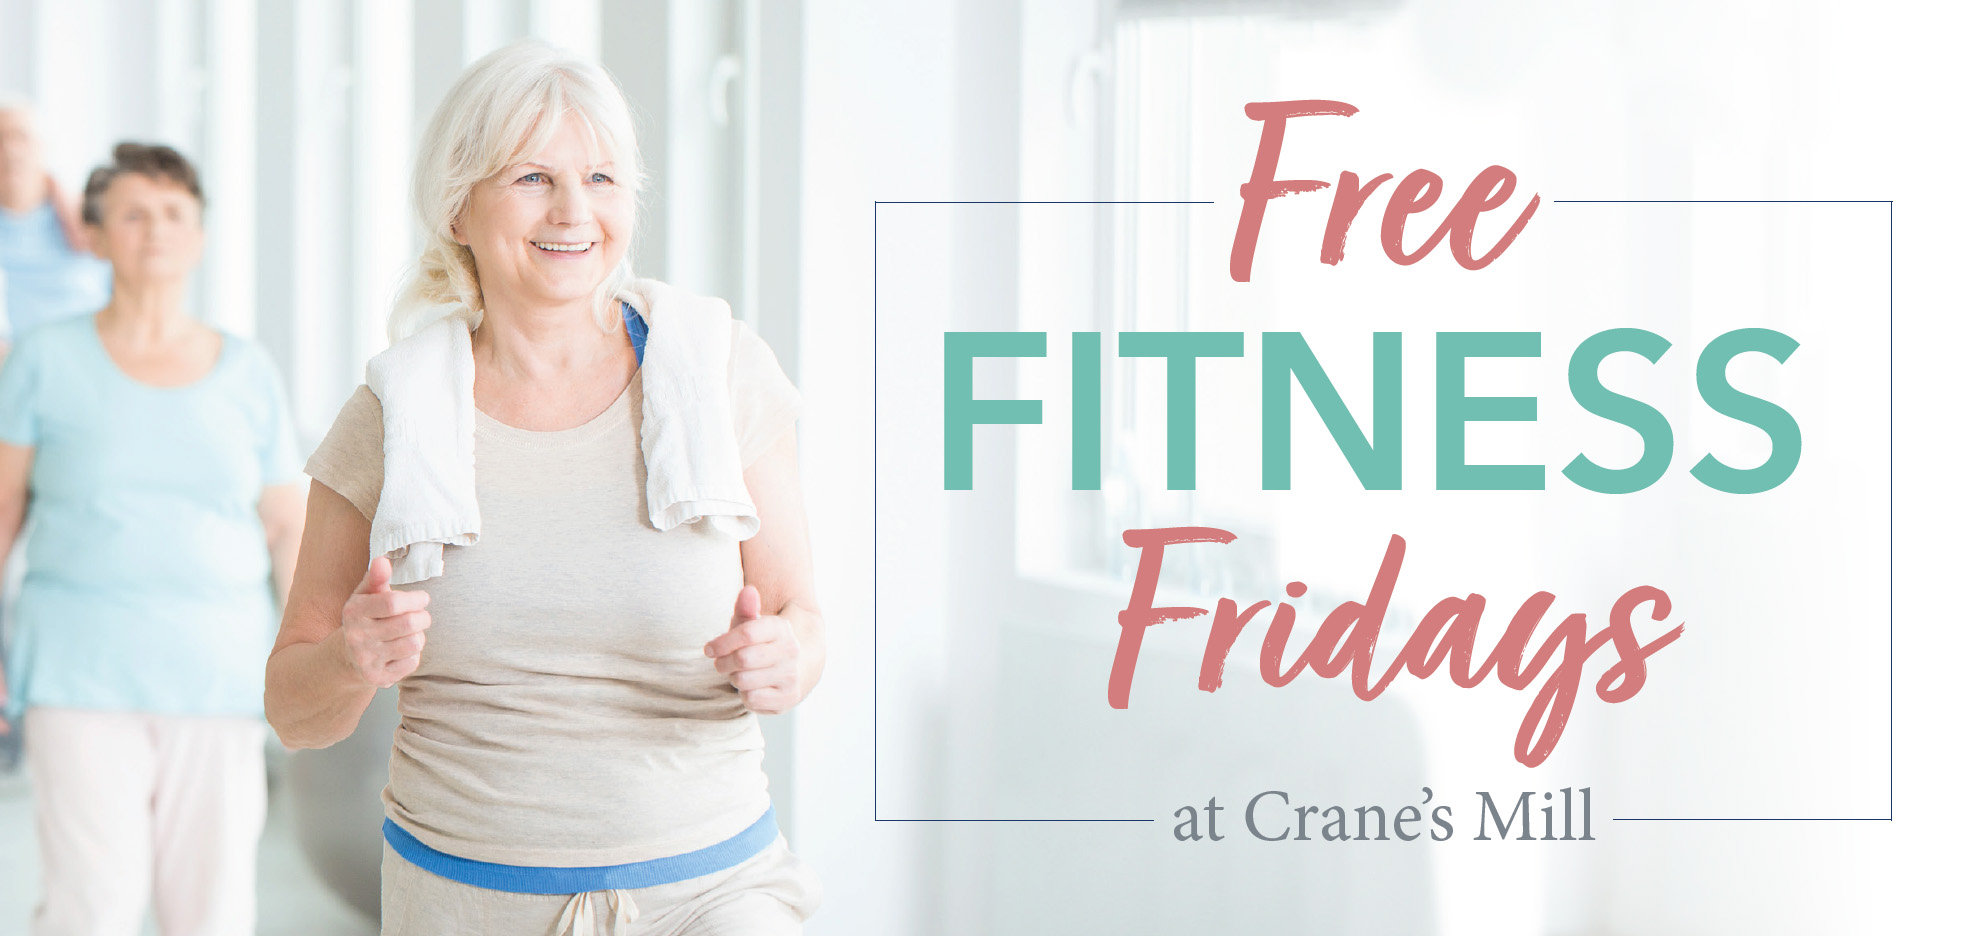 Free Fitness Fridays (Thursday!)